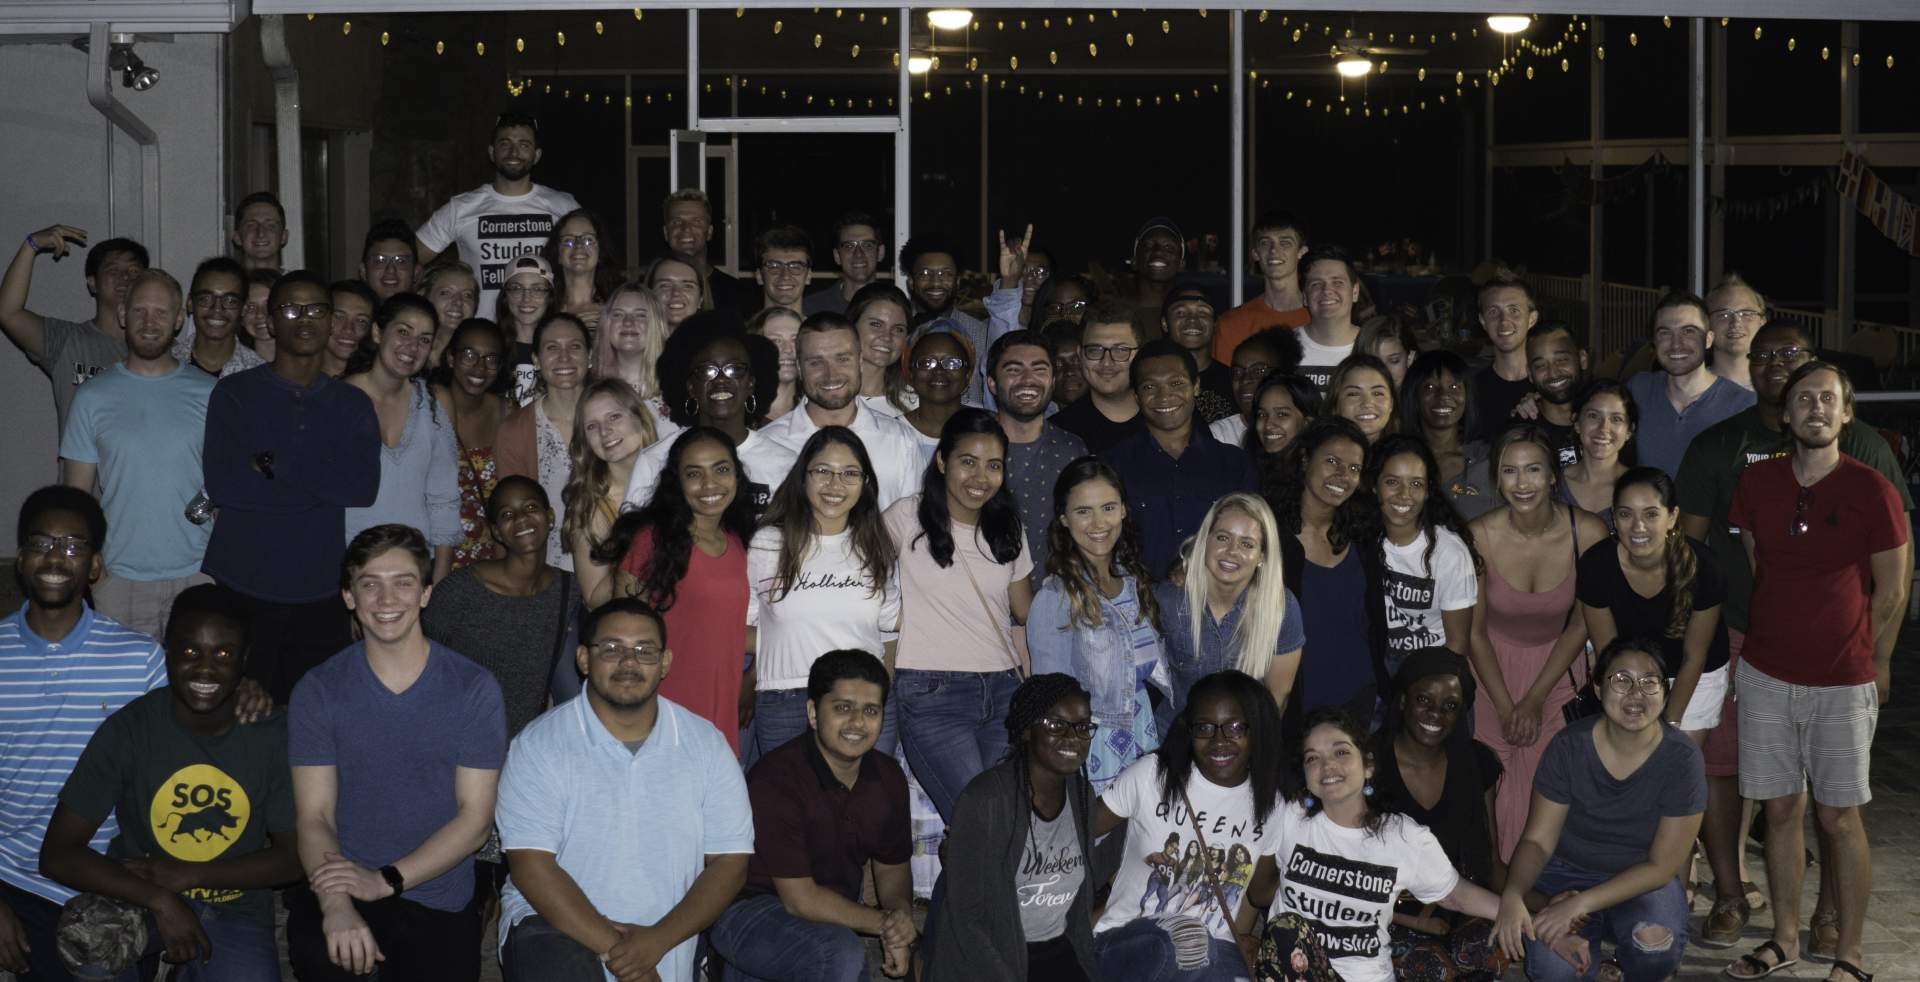 Night around the world: Cornerstone student fellowship out at night